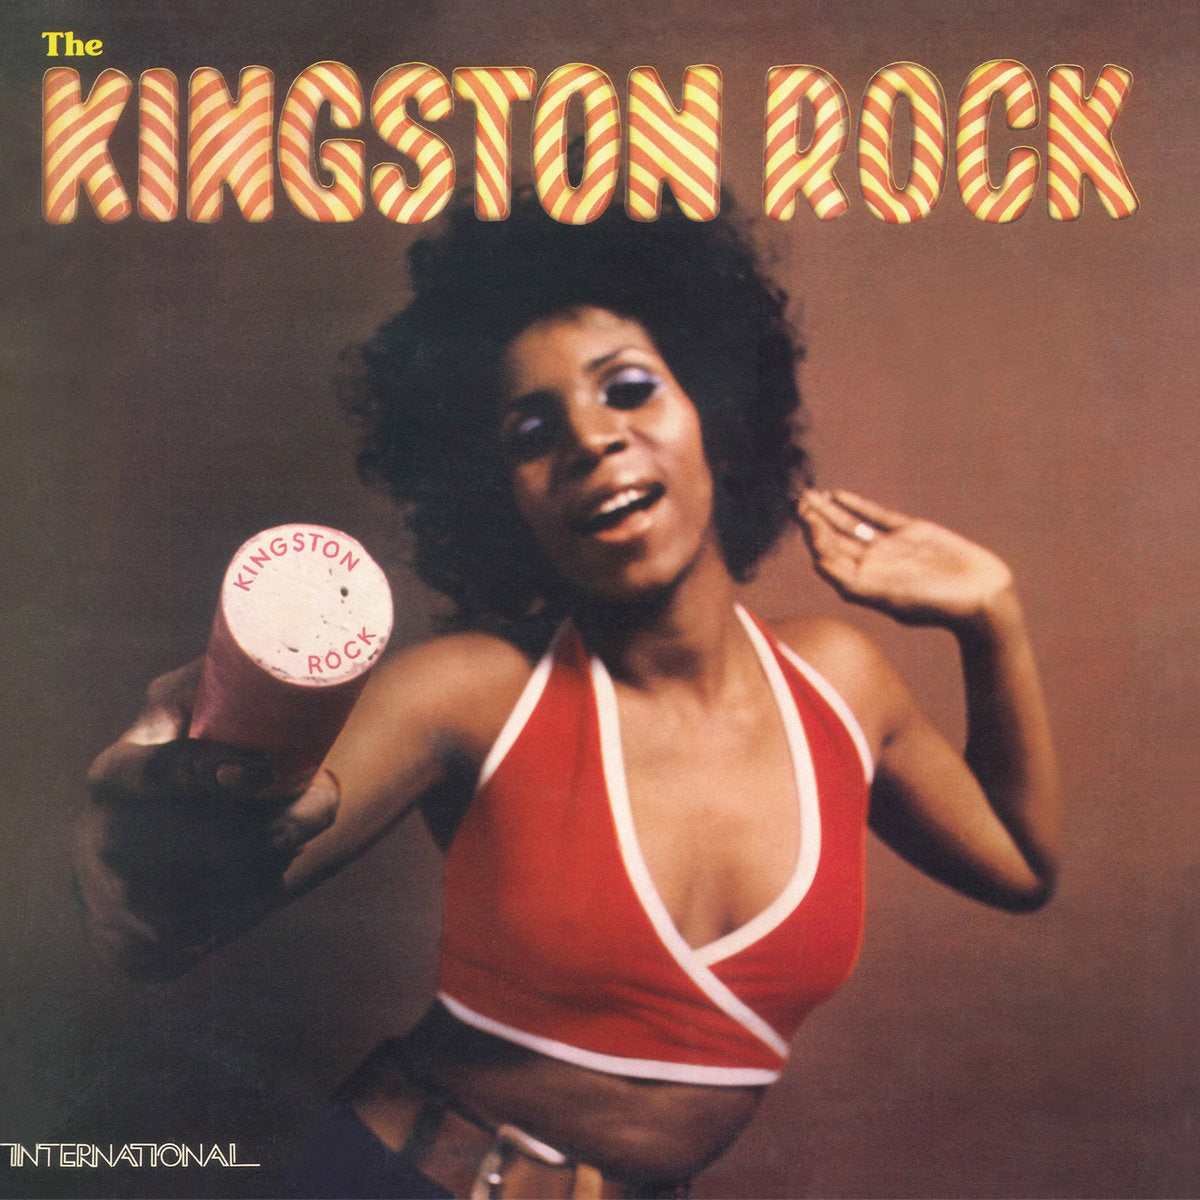 Andy, Horace: The Kingston Rock (Vinyl LP)